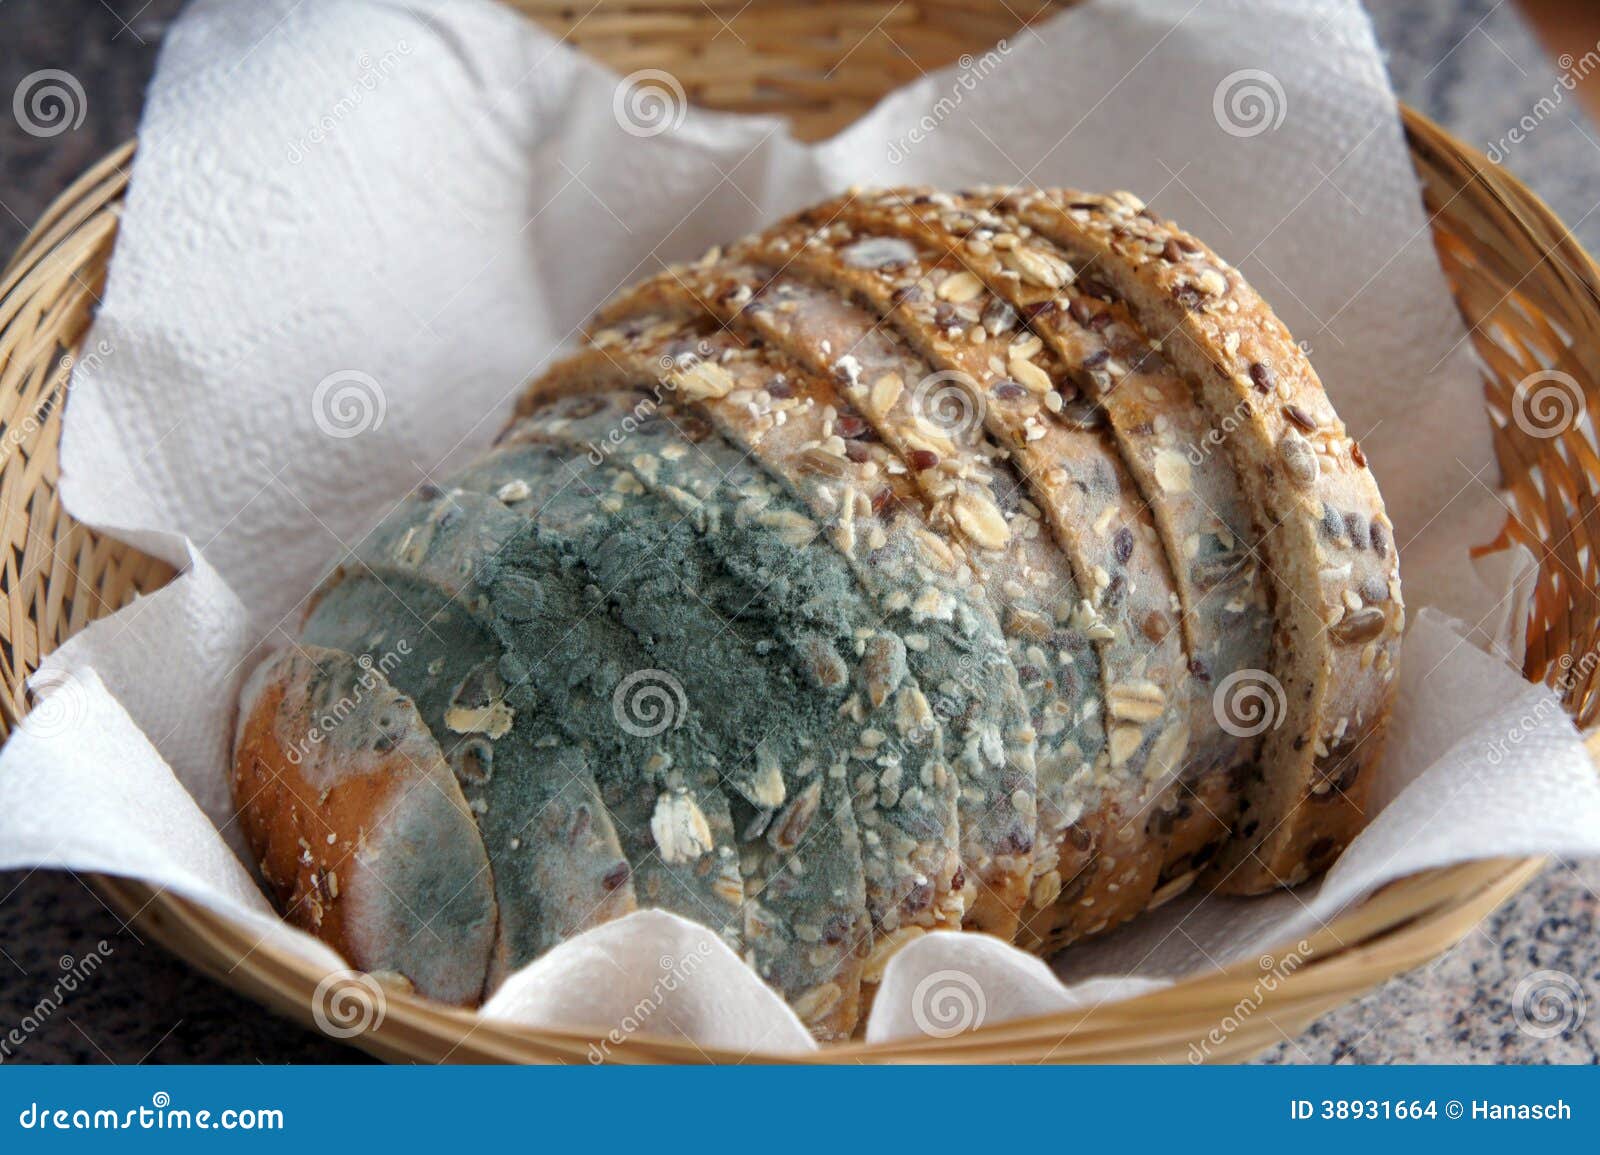 bread-mold-old-foul-mould-38931664.jpg